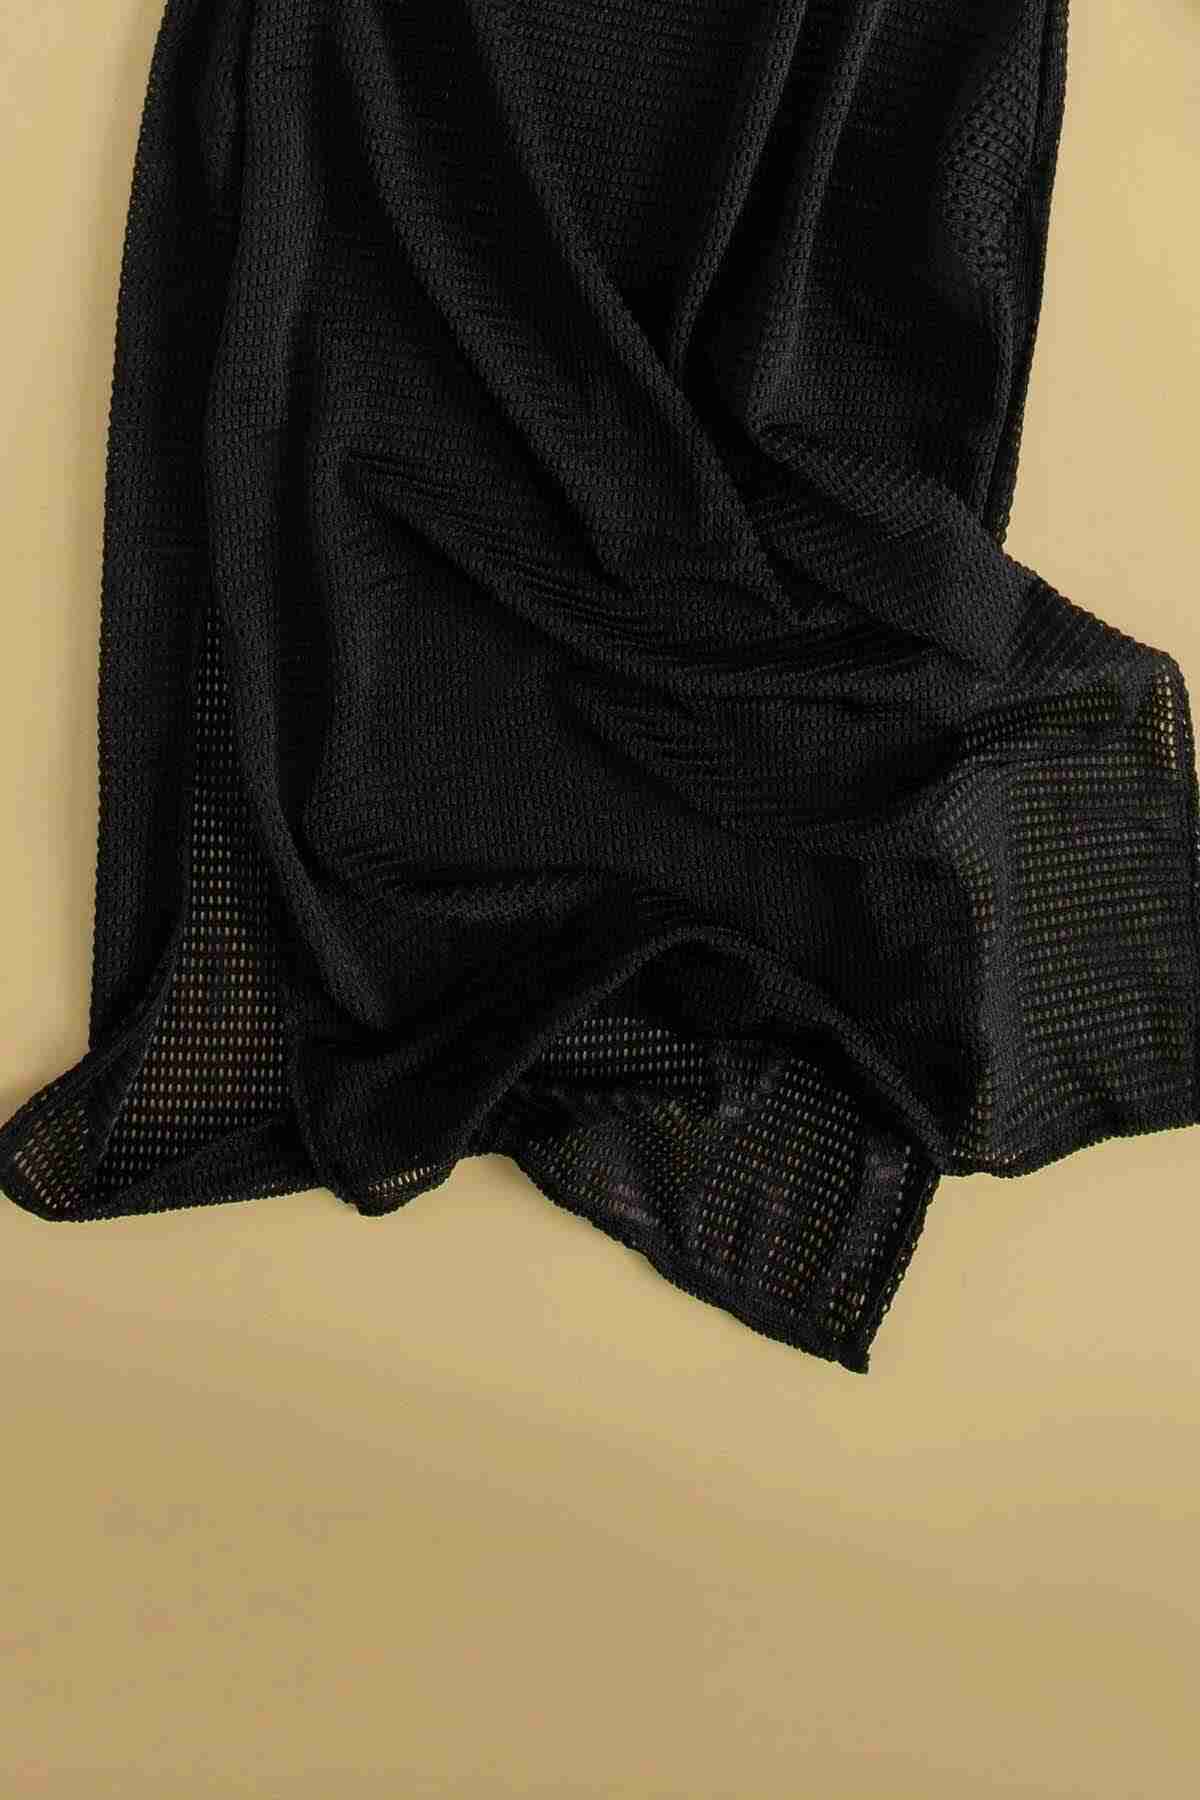 Benutzerdefinierte Stoff stilvolle Pareo Strandkleid Kimono Kaftan schwarz